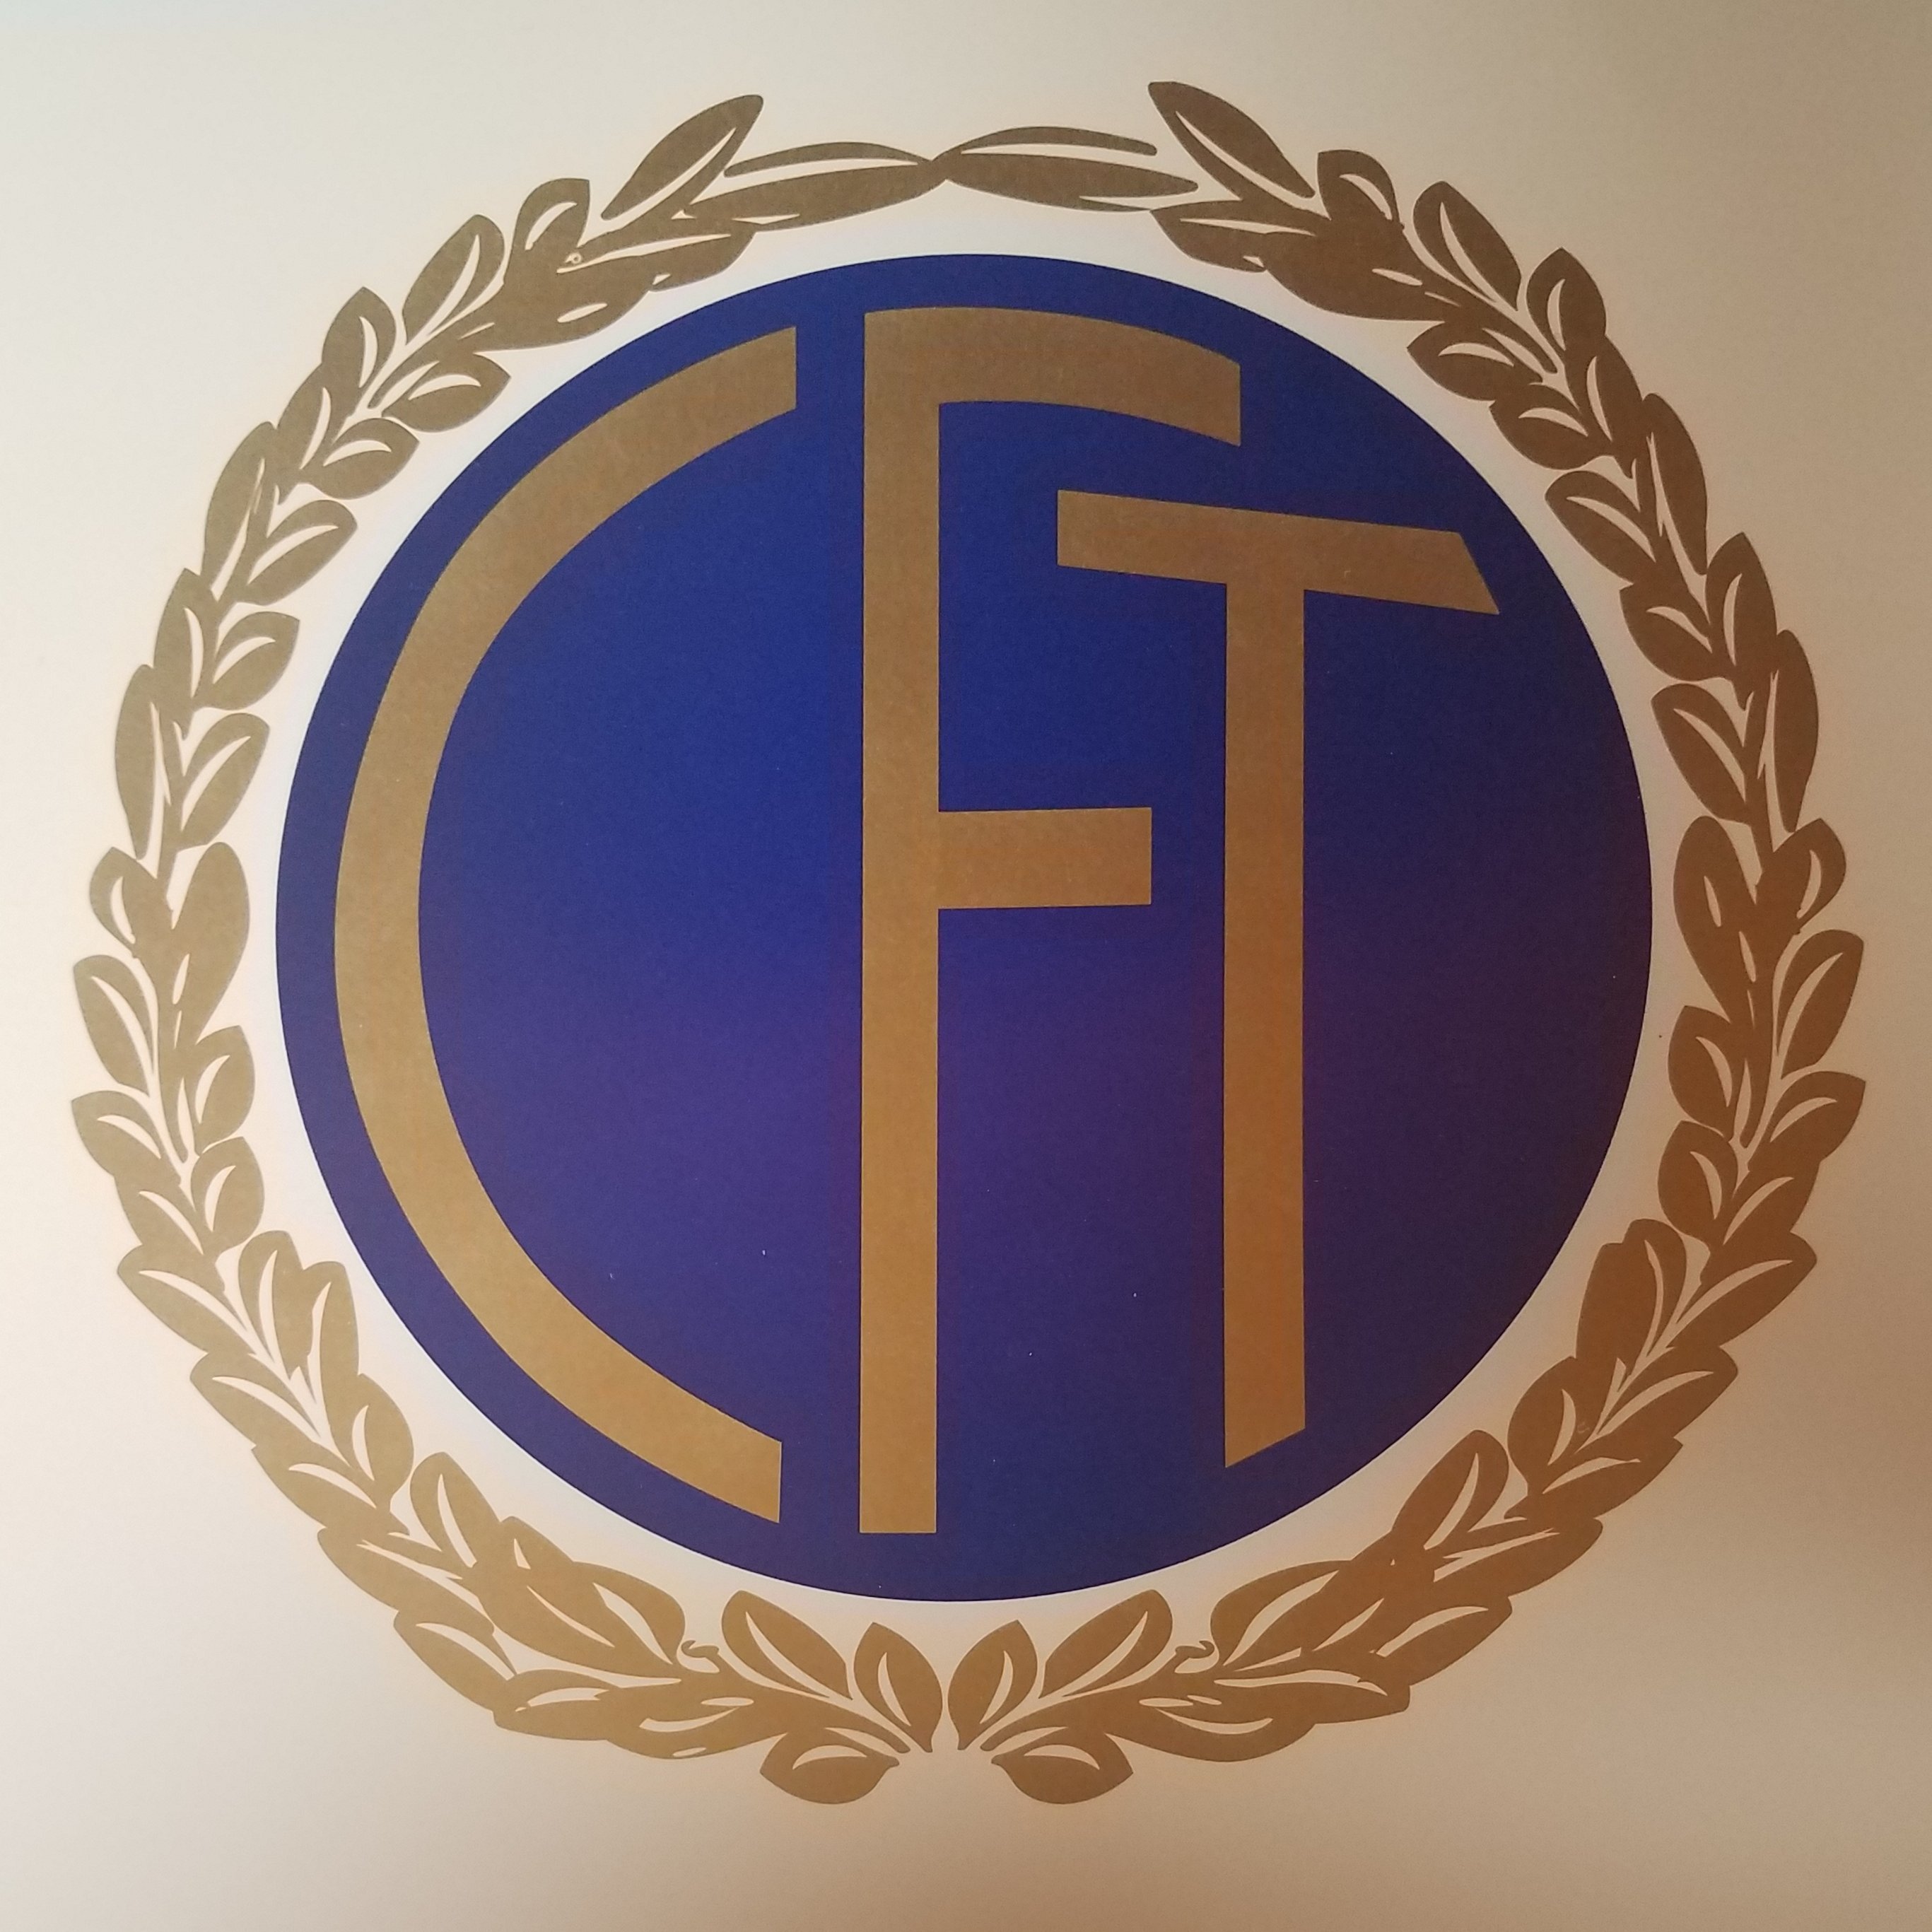 Calcasieu Federation of Teachers and School Employees